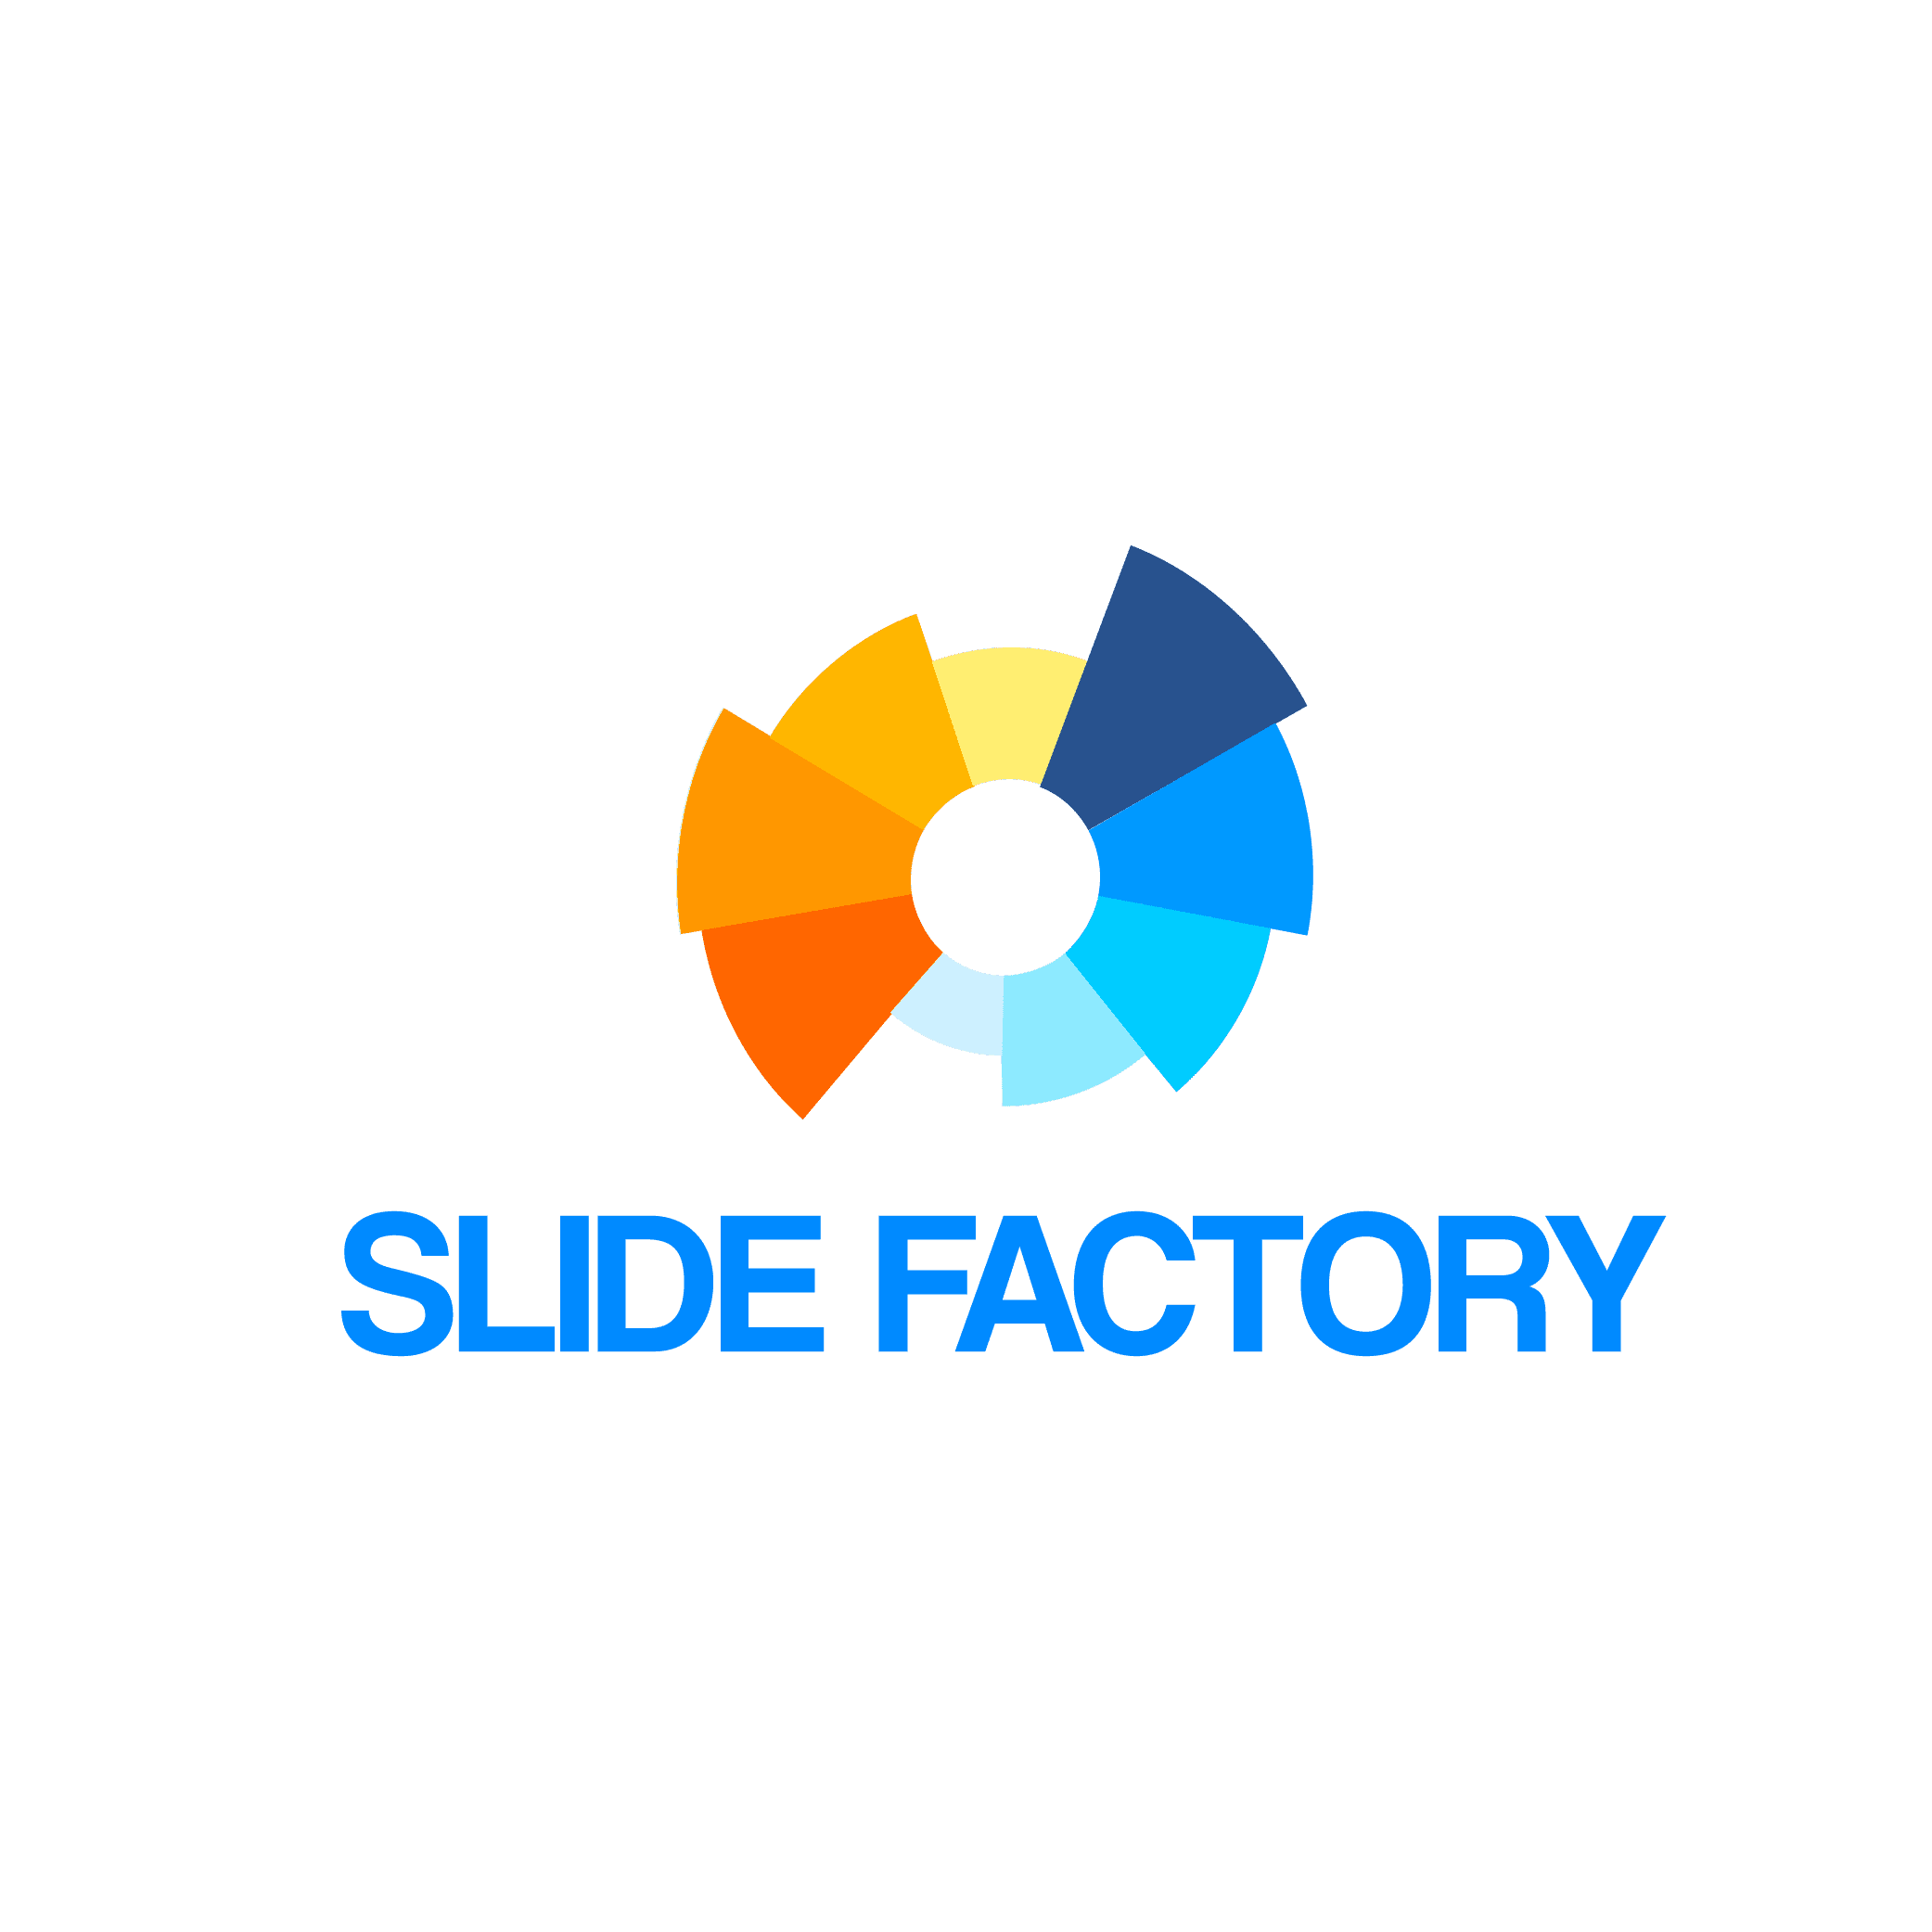 Slide Factory